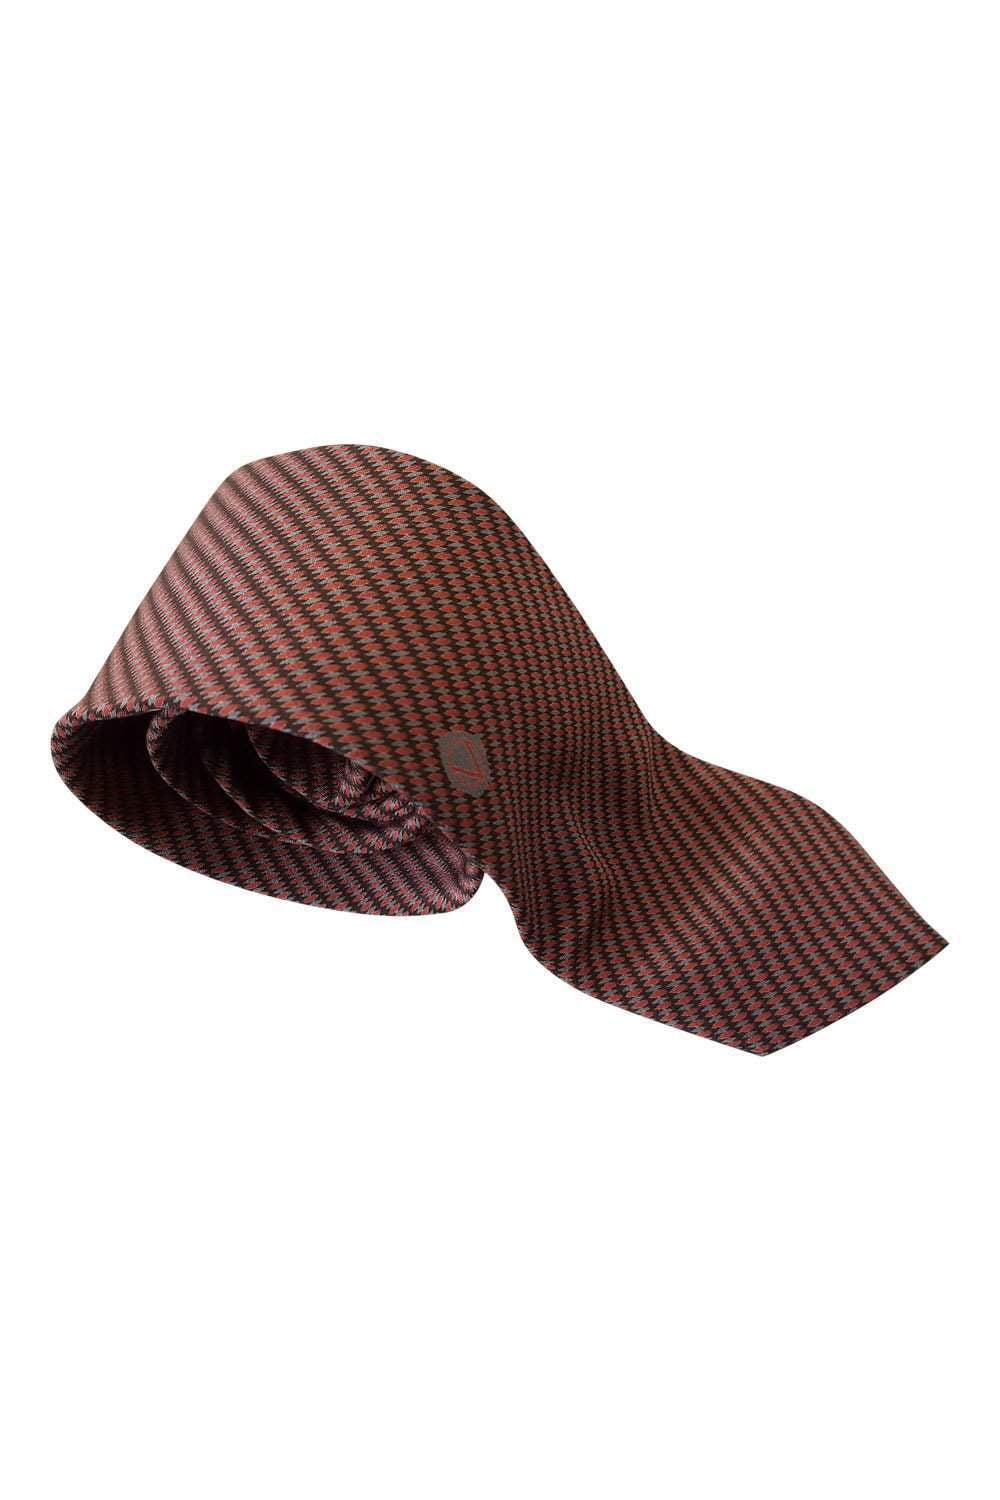 VALENTINO Vintage Silk Brown Tie Red Grey Stripe Repeat-Valentino-The Freperie